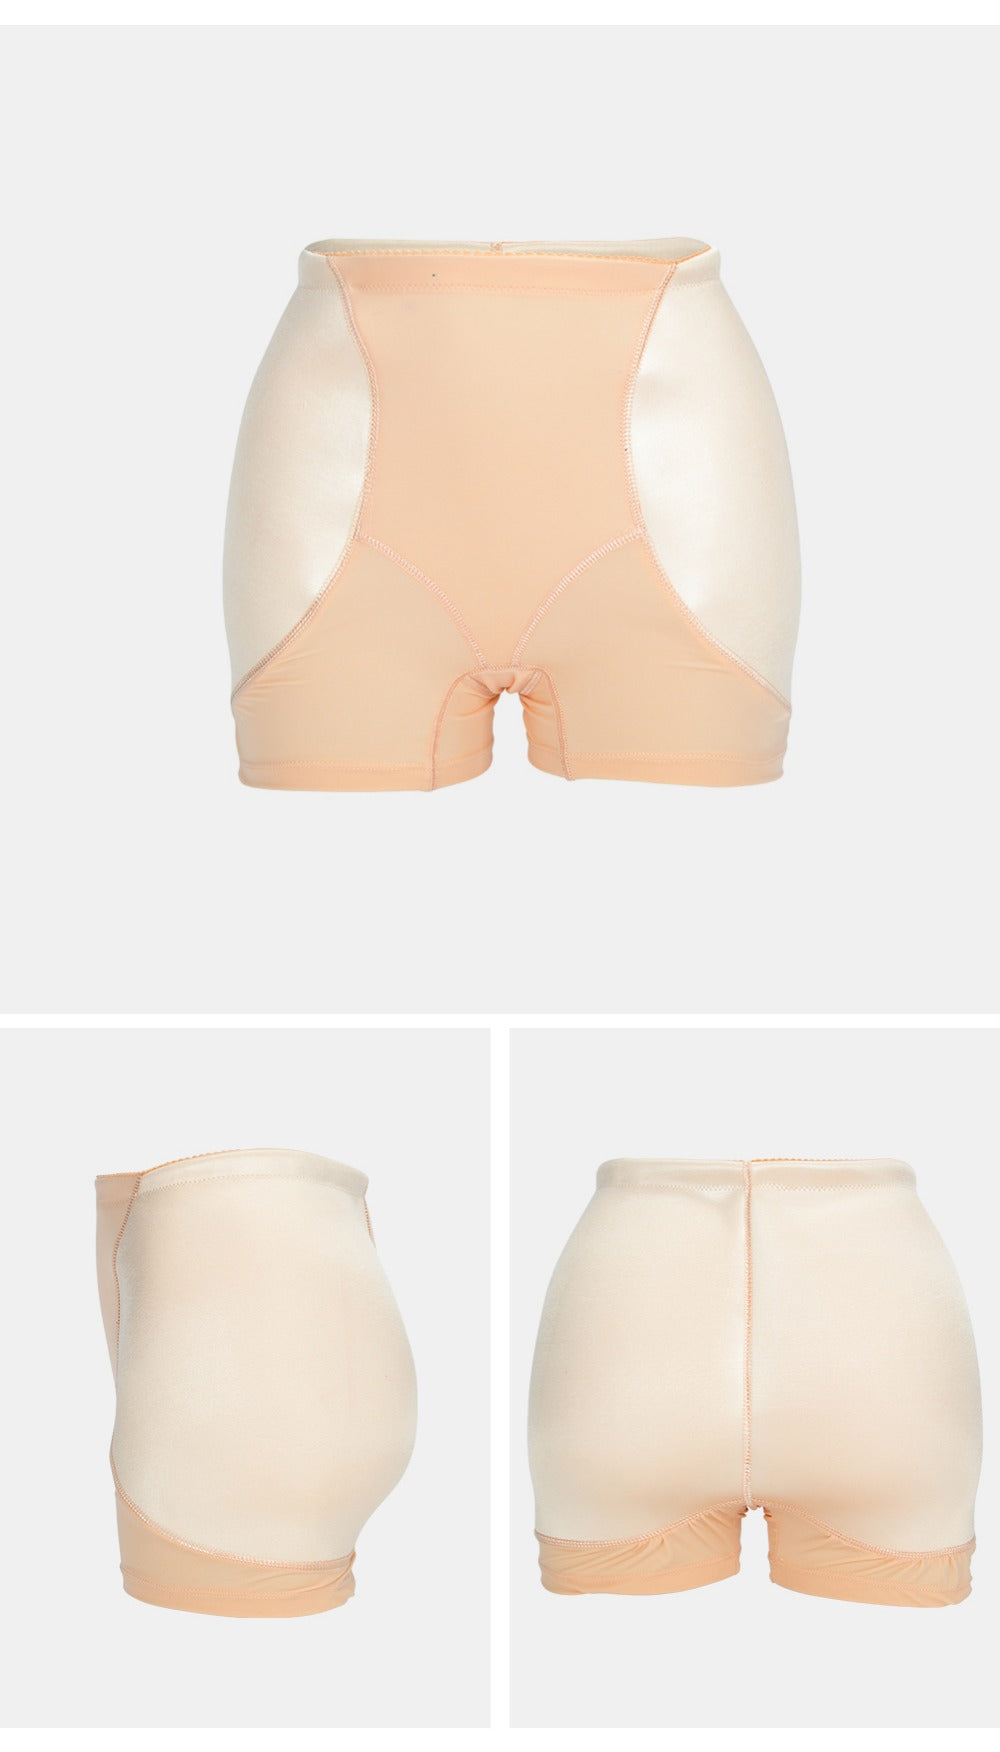 WOMEN PAD BUTT Lifter Hip Enhancer Shaper Panty Underwear Bum Lift Shapewear  HOT $29.79 - PicClick AU